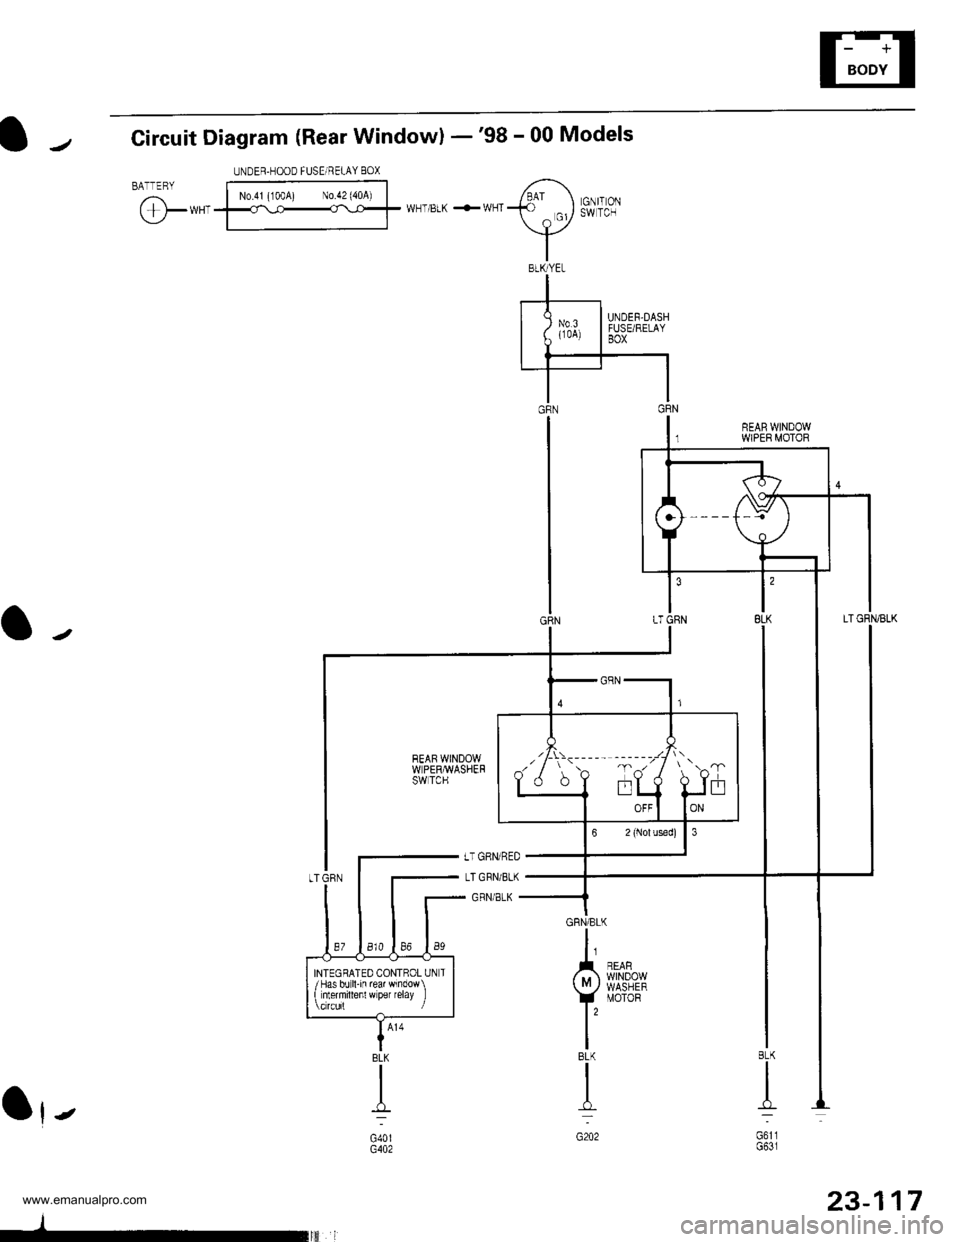 HONDA CR-V 1999 RD1-RD3 / 1.G Owners Manual 
Circuit Diagram (Rear Windowl -98 - 00 Models
BATTERYUNDER.HOOD FUSEi RELAY 80X
N0.41 (100A) N0.42 (40A)
@*,WHT/BLK +WHTGNIT ONSW TCH
REAR WINDOWWPER MOTOR
Ot-
GRN/BLK
I
A n,$s".,,,
vil8t8E
IBLK
I